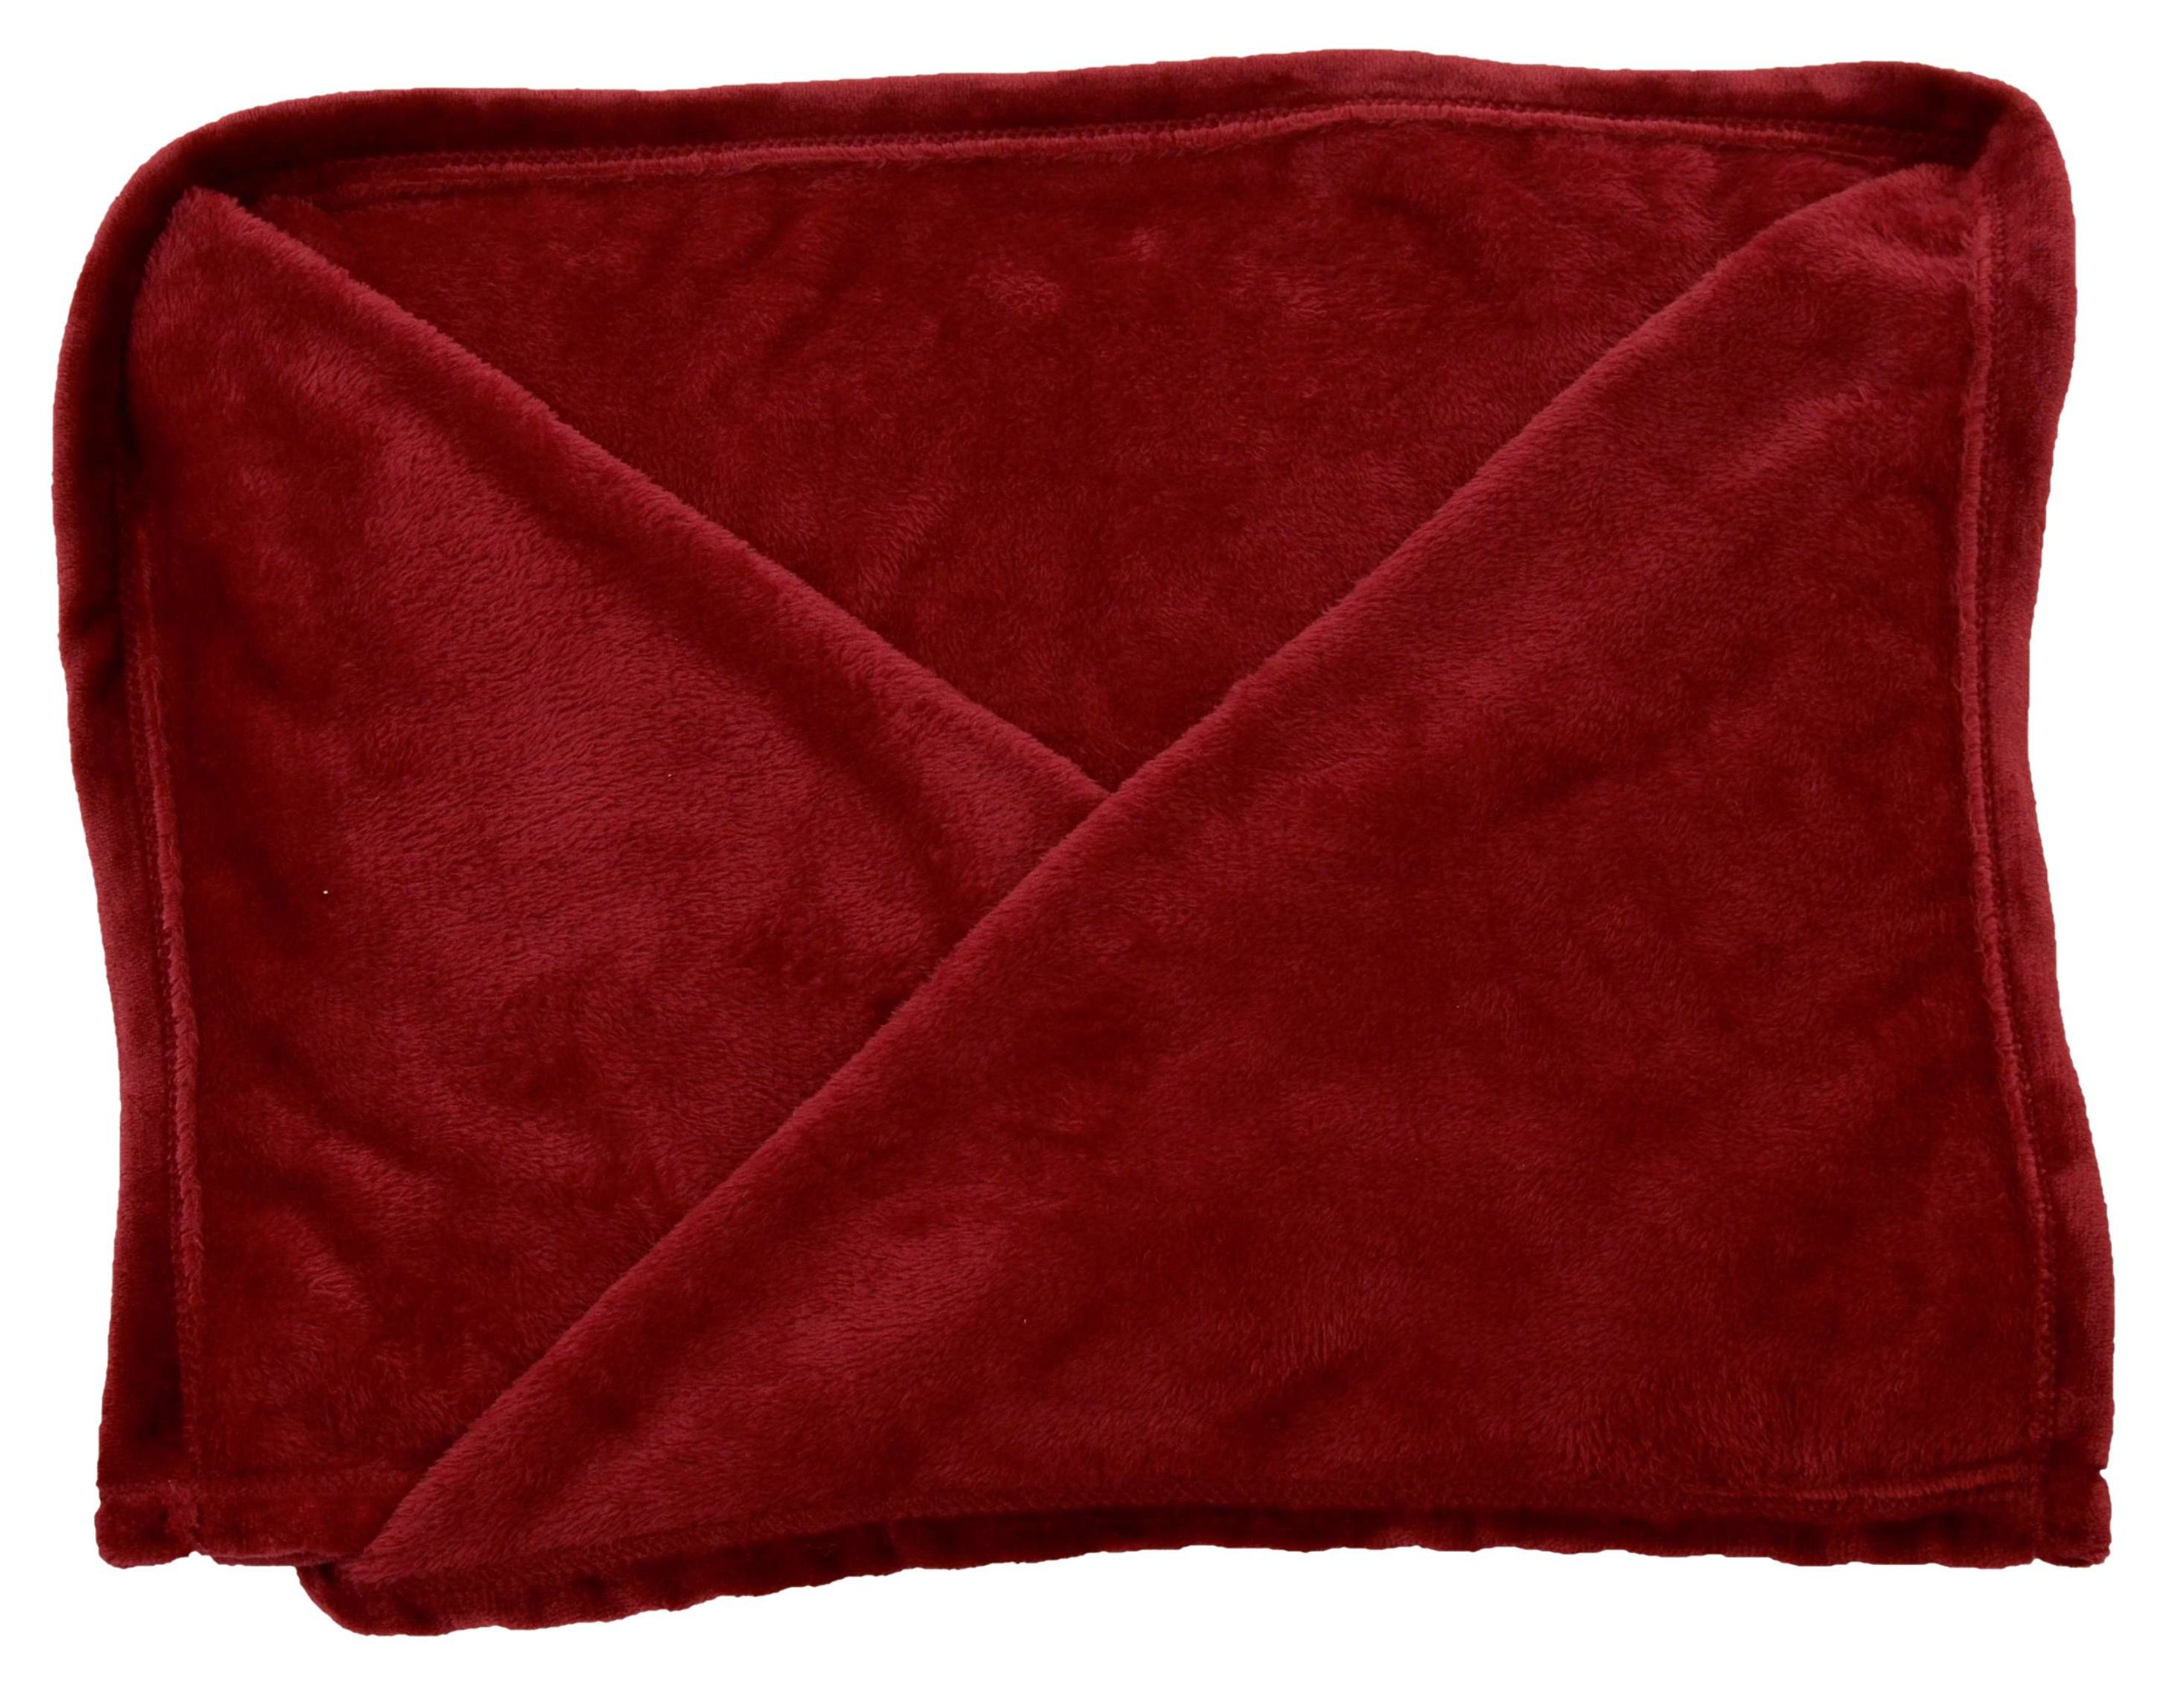 Coperta in pile porta coperta rossa 150 x 200 cm